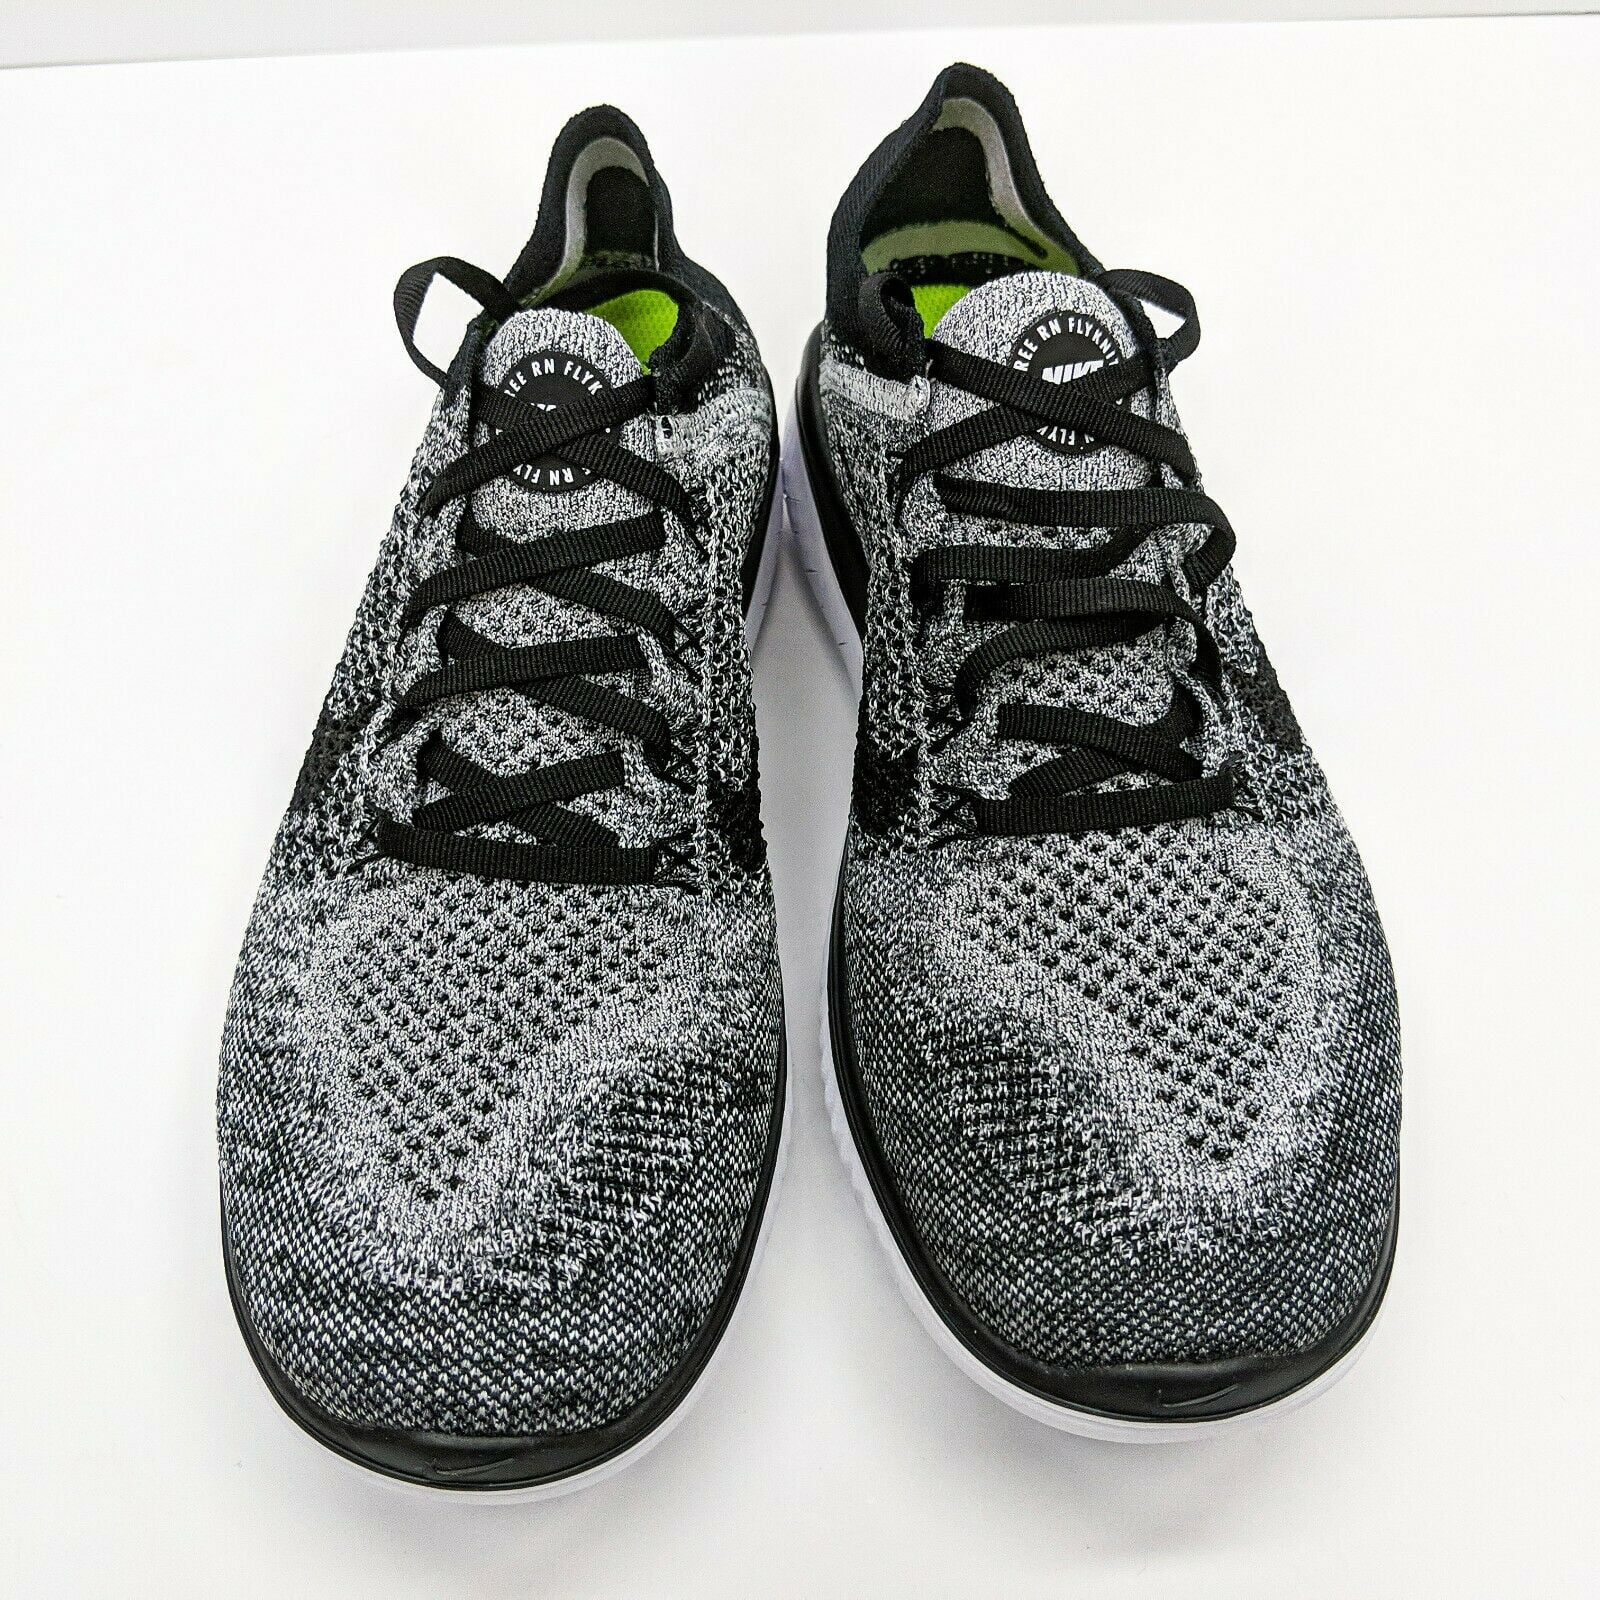 nike free rn flyknit running shoes (10.5, black/white/black) Walmart.com